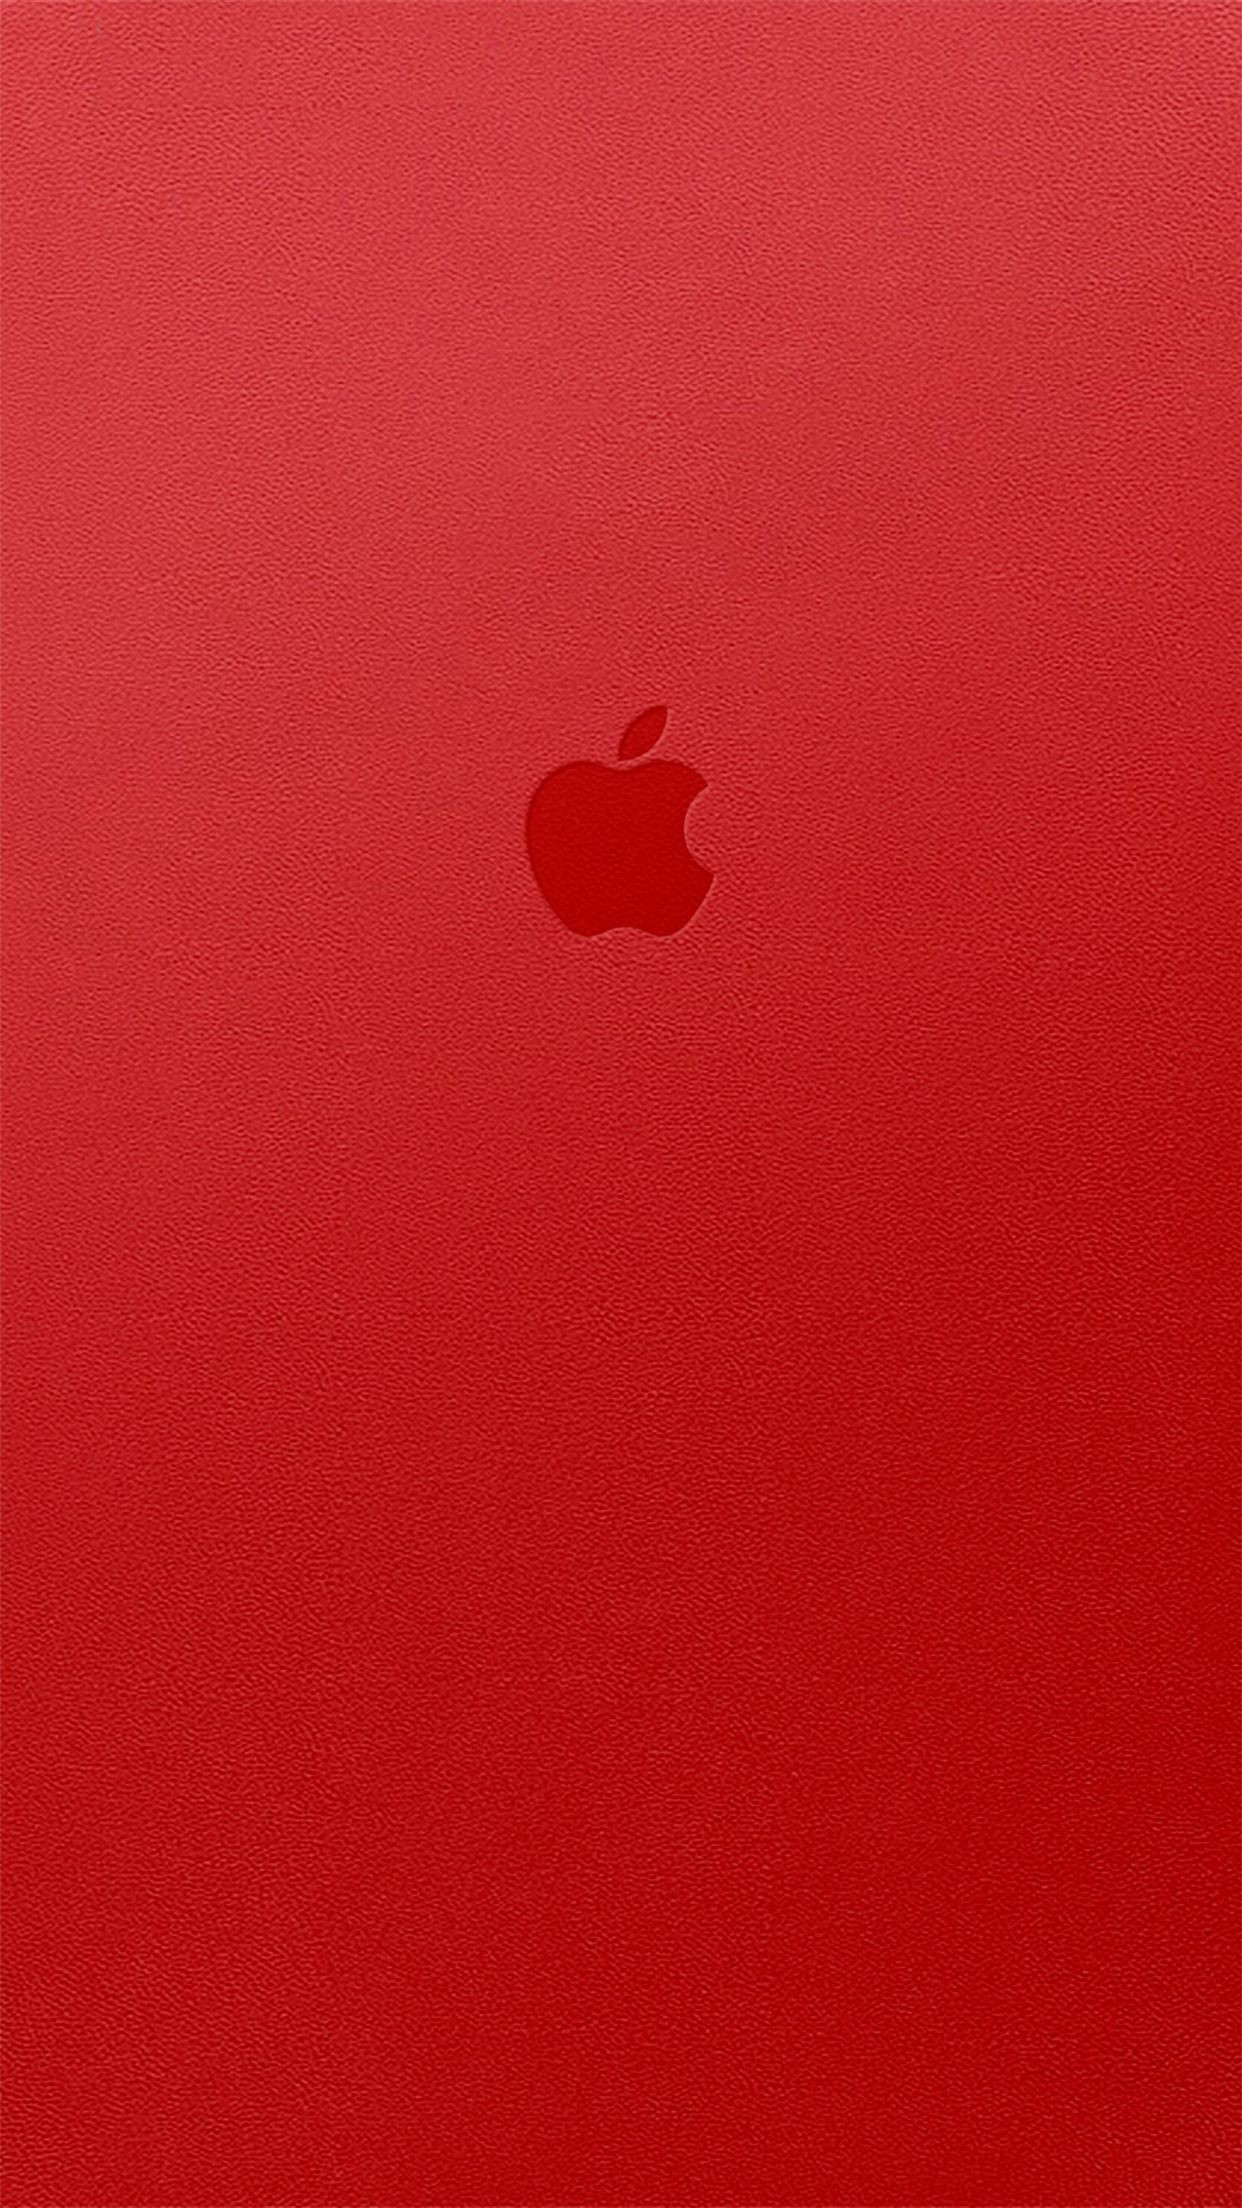 1242x2208 Apple iPhone 6s Plus wallpaper red